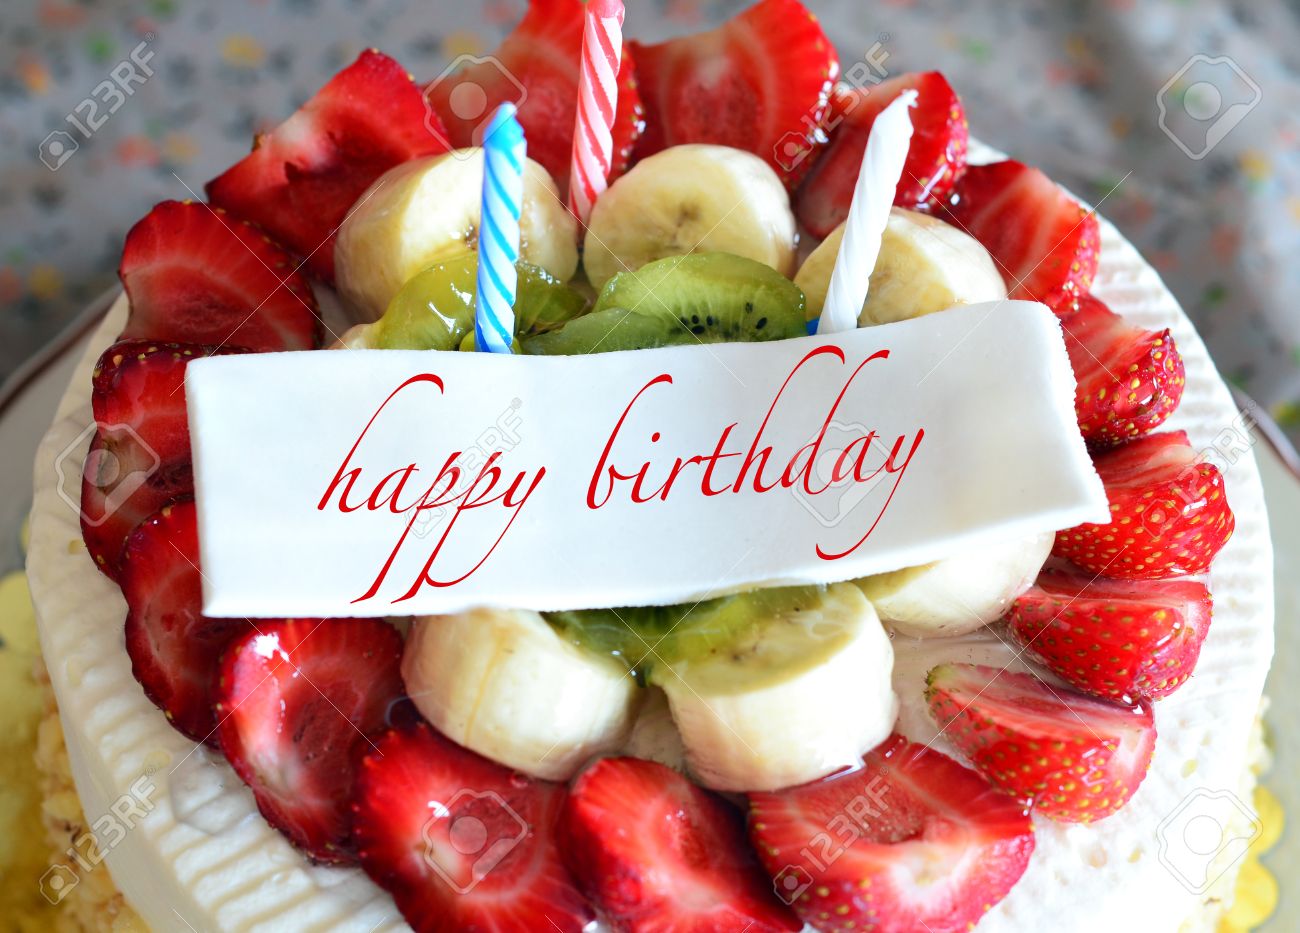 34398961-birthday-cake-with-happy-birthday-tag.jpg